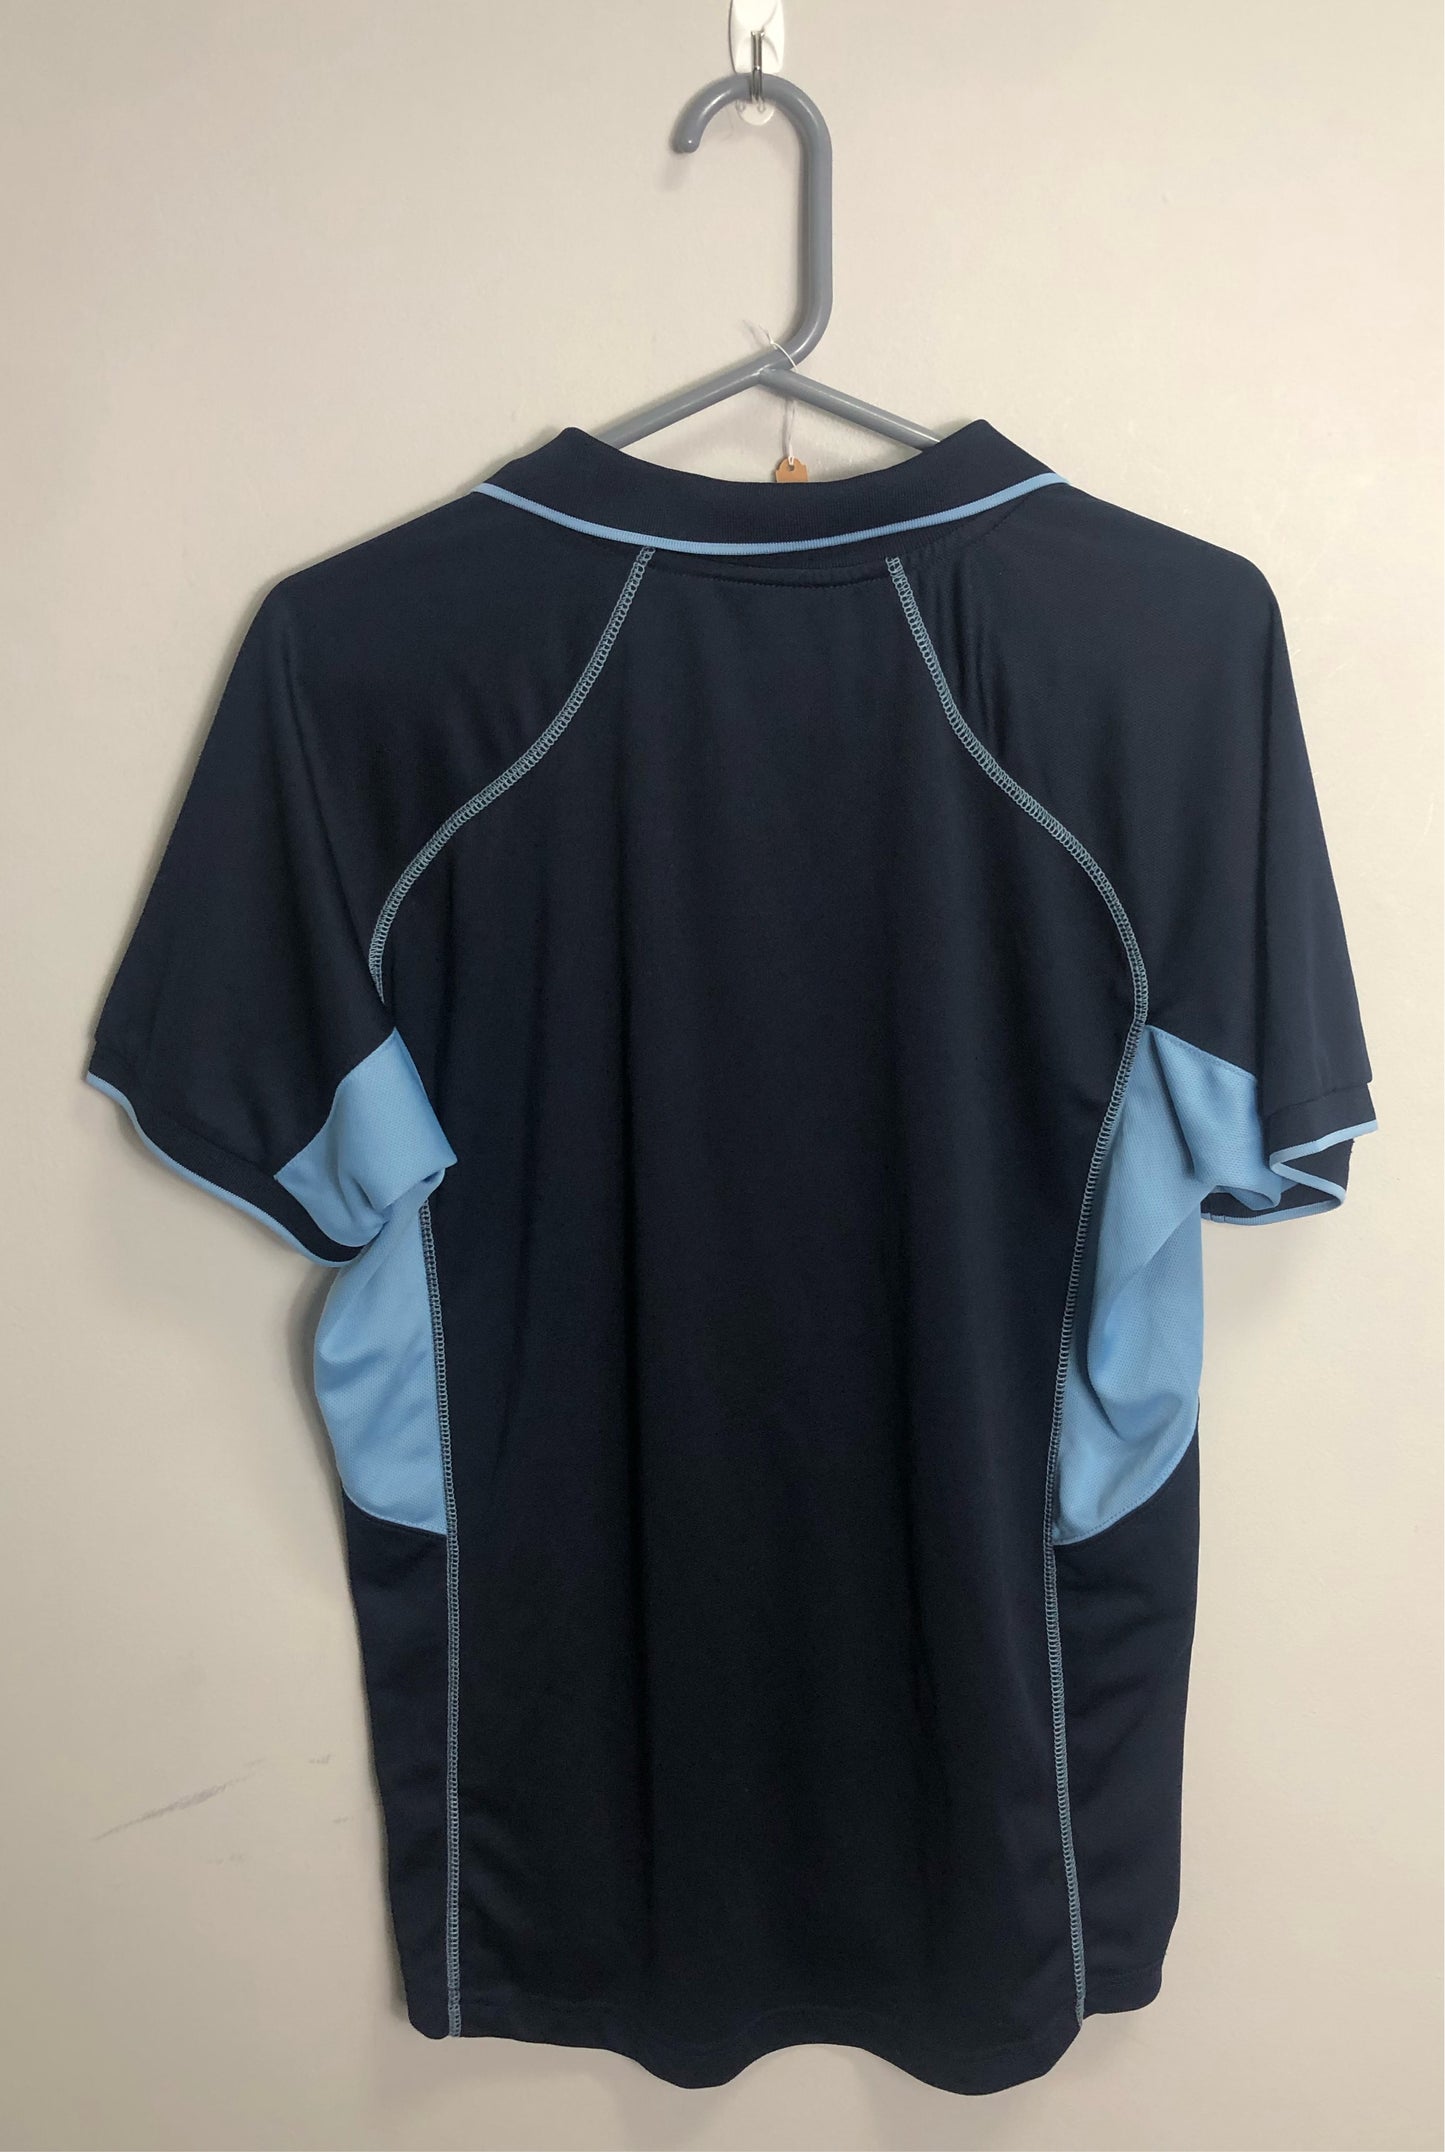 Waterboys Polo Shirt - Medium - 40” Chest